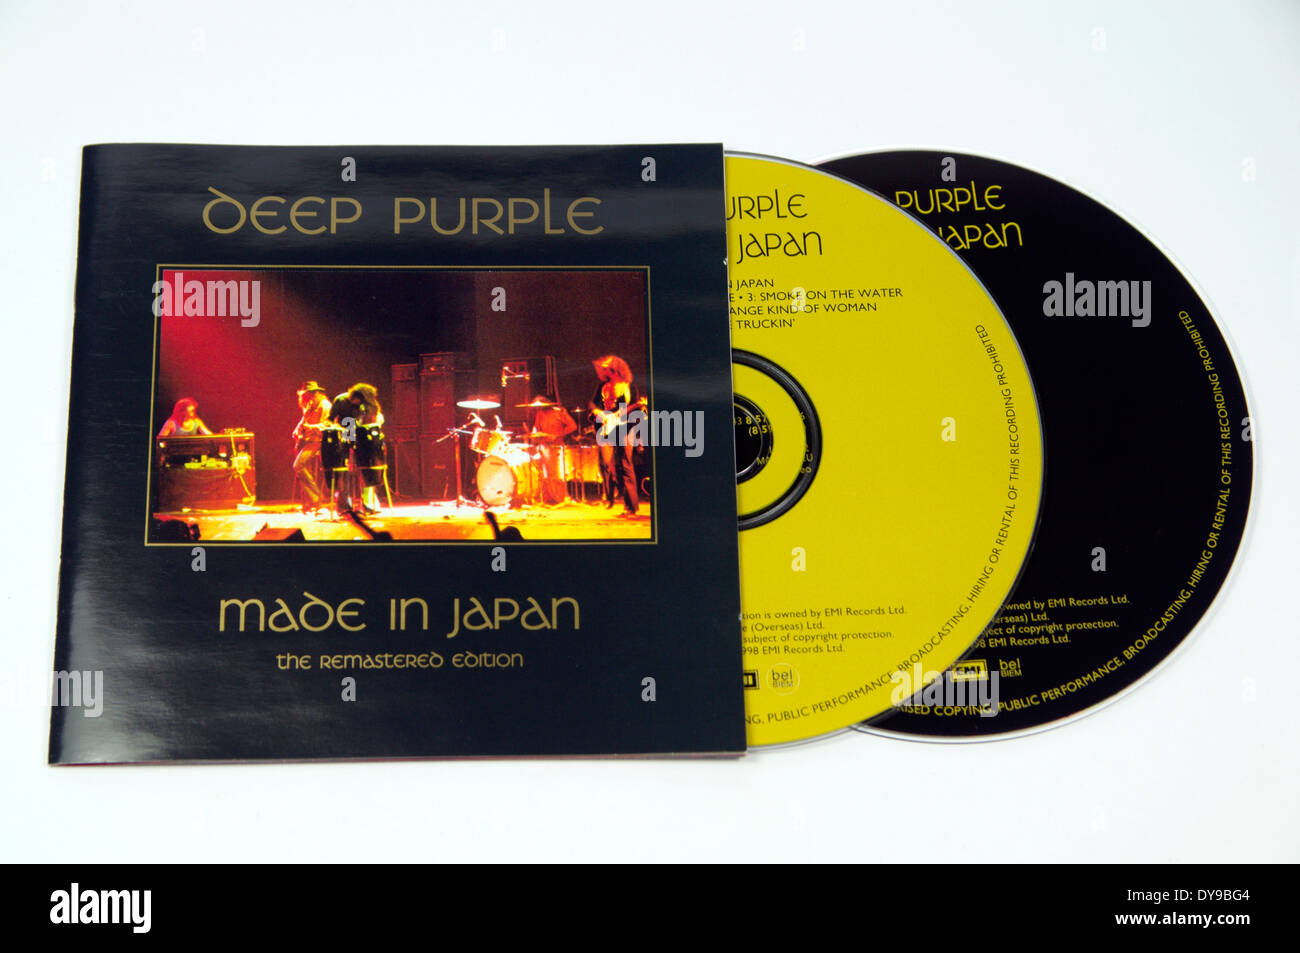 Deep Purple 'Made in Japan' Album Stock Photo